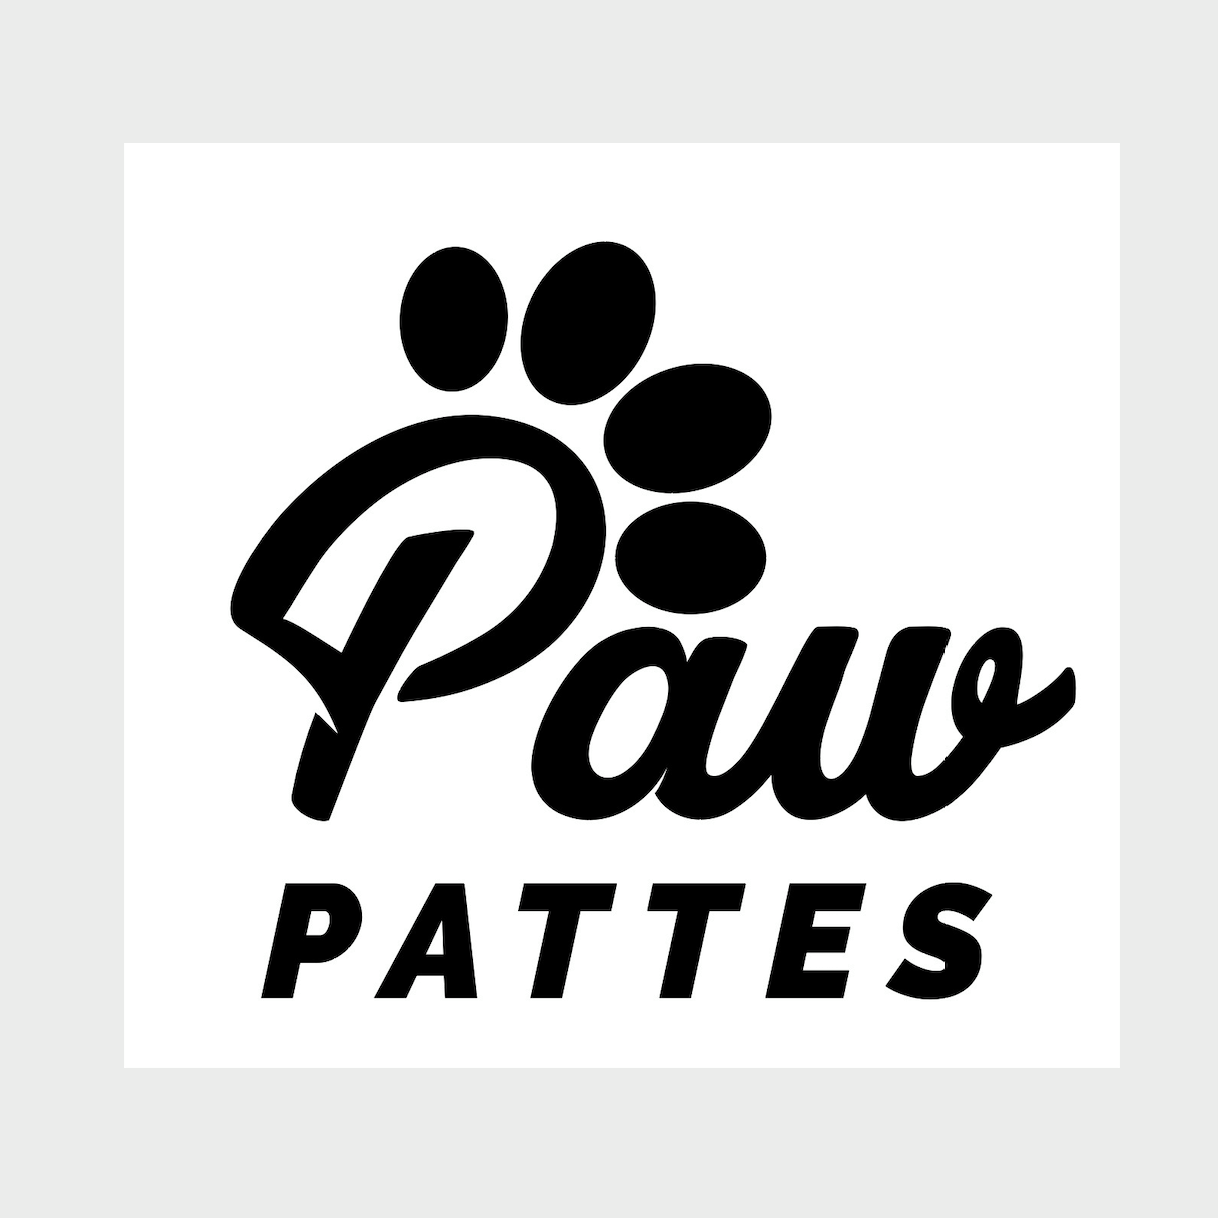 Association Paw'pattes